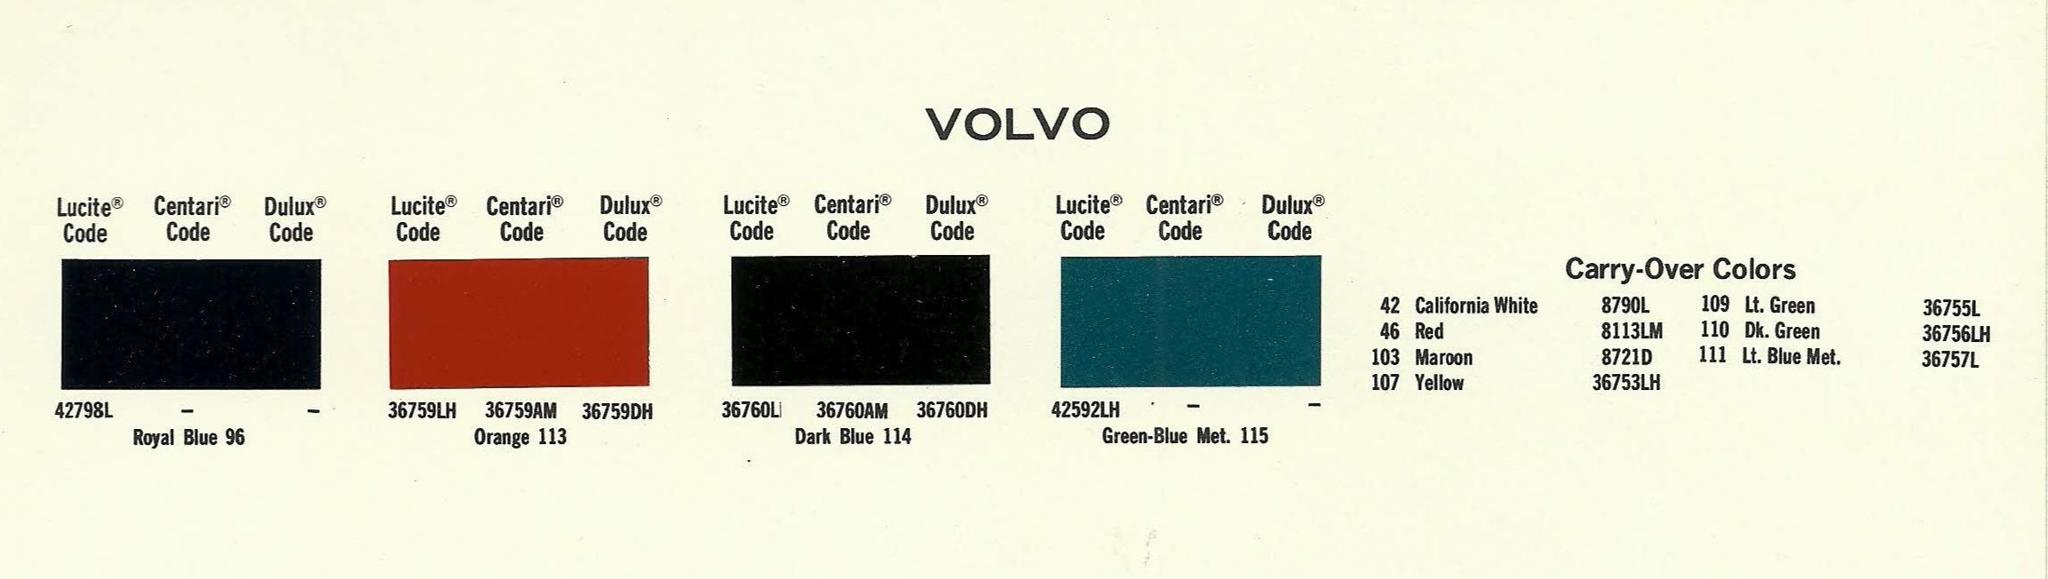 Volvo Paint Codes